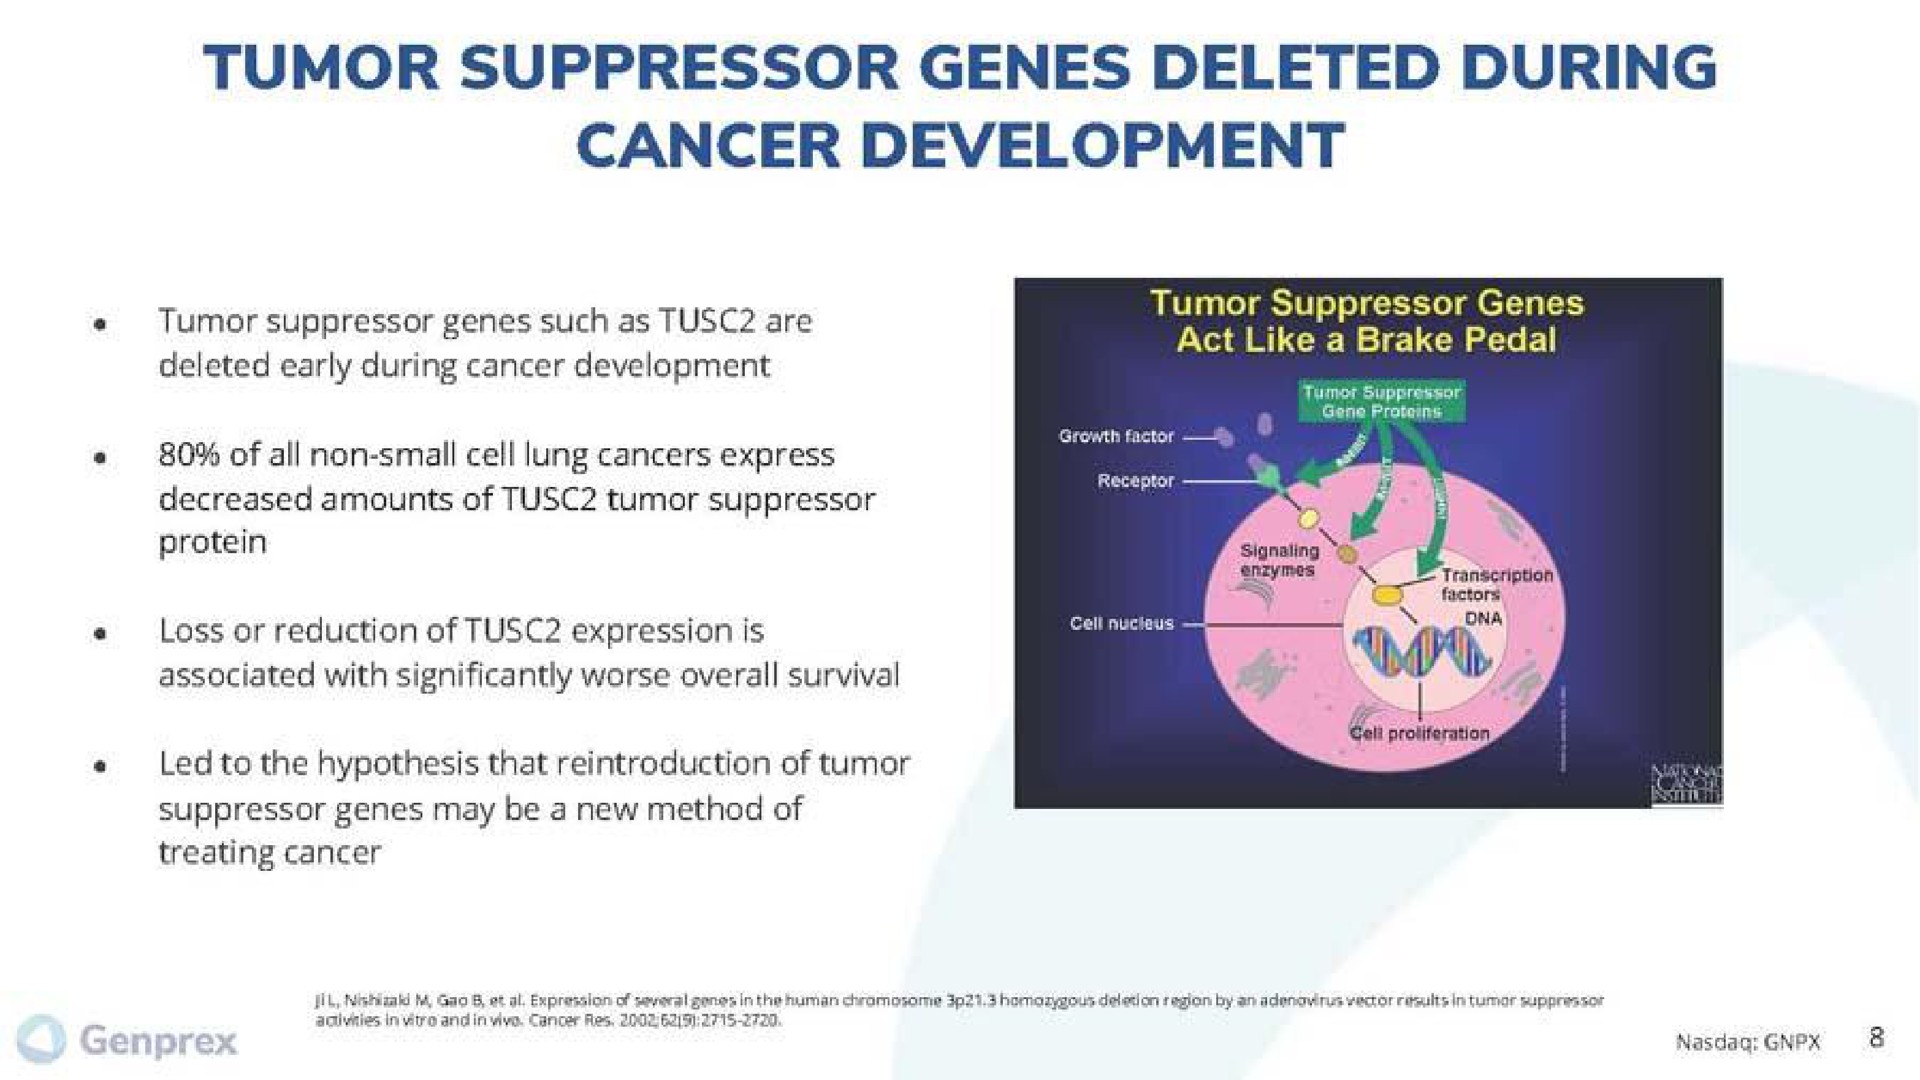 tumor suppressor genes deleted during cancer development | Genprex